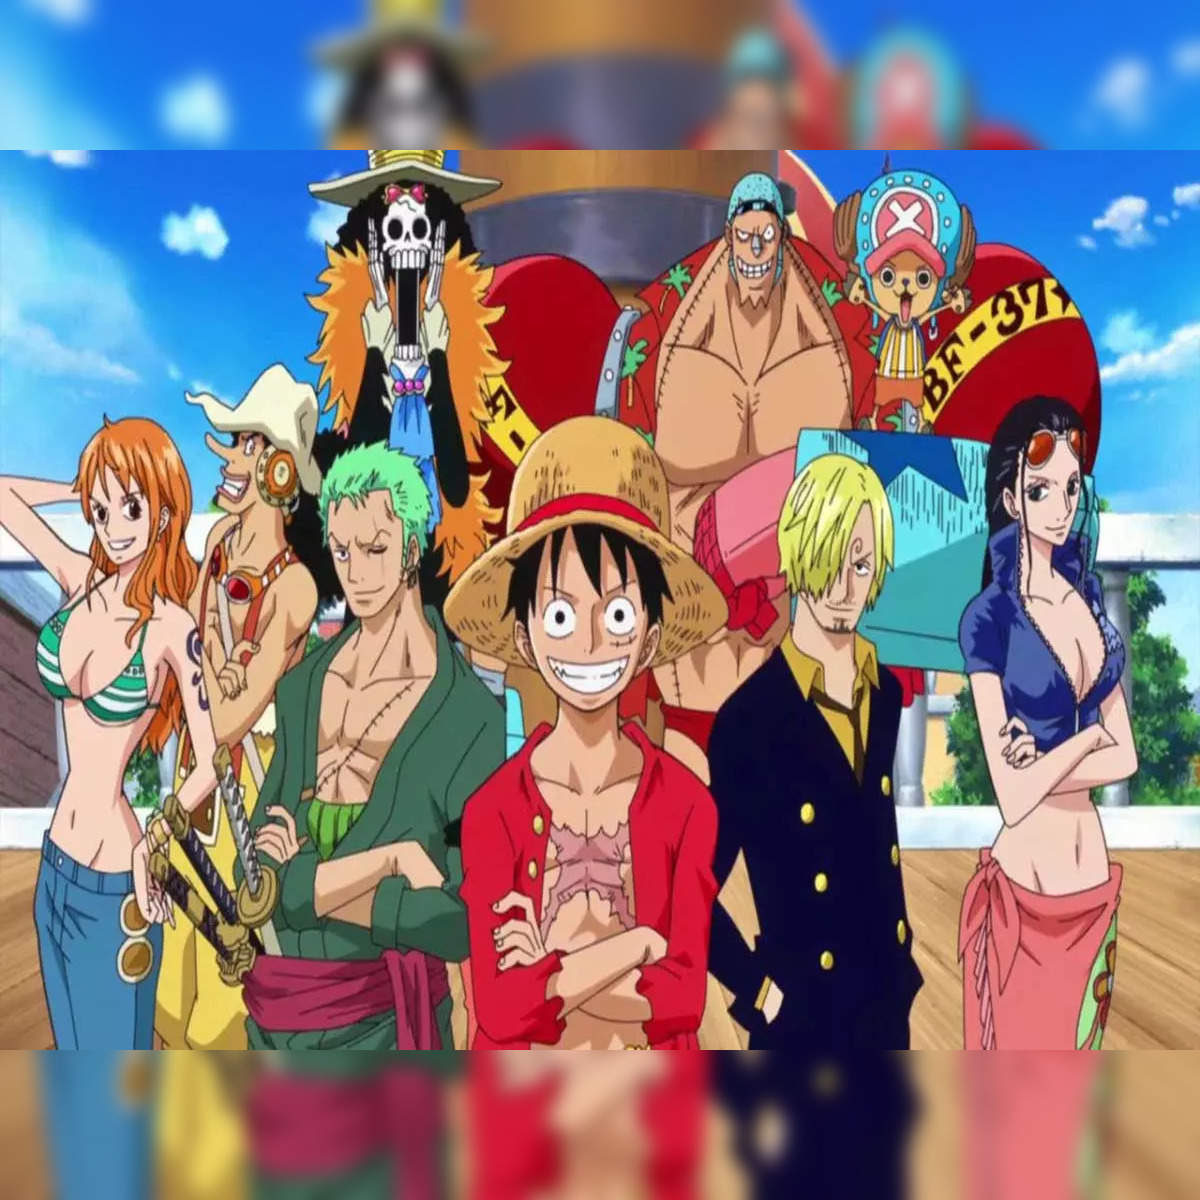 One Piece (JP) TV Show Air Dates & Track Episodes - Next Episode